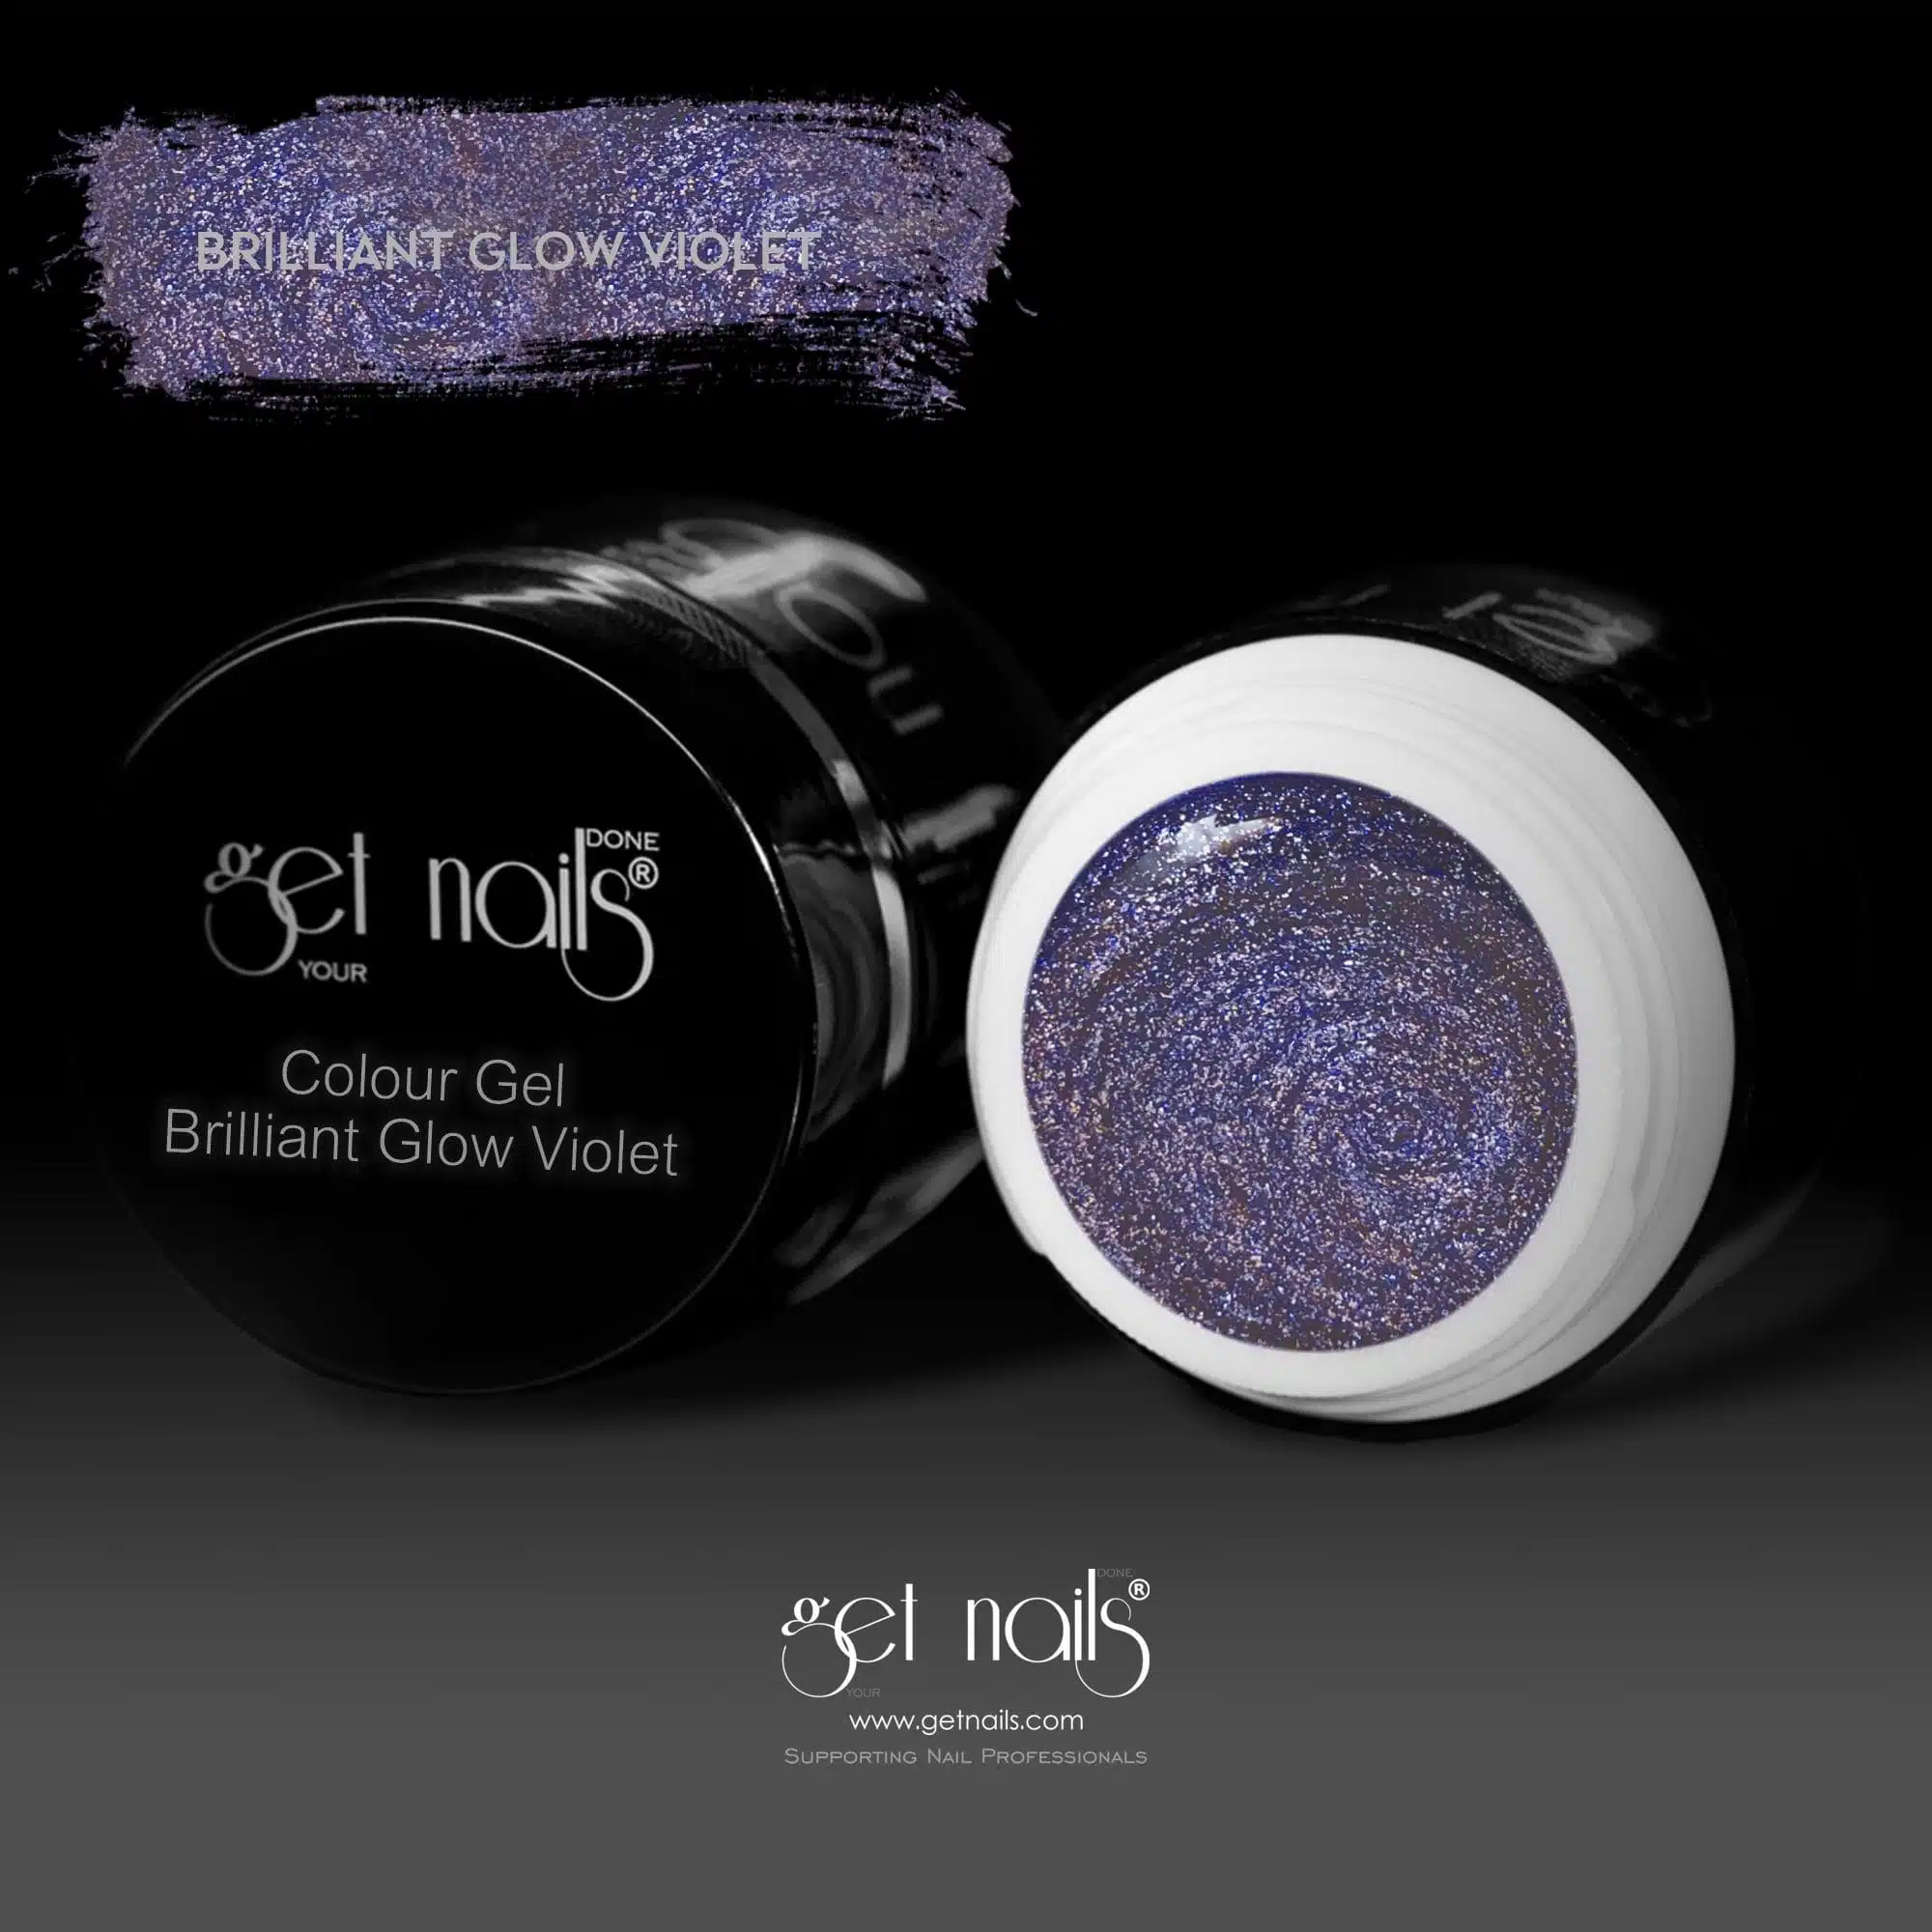 Get Nails Austria - Color Gel Brilliant Glow Violet 5g